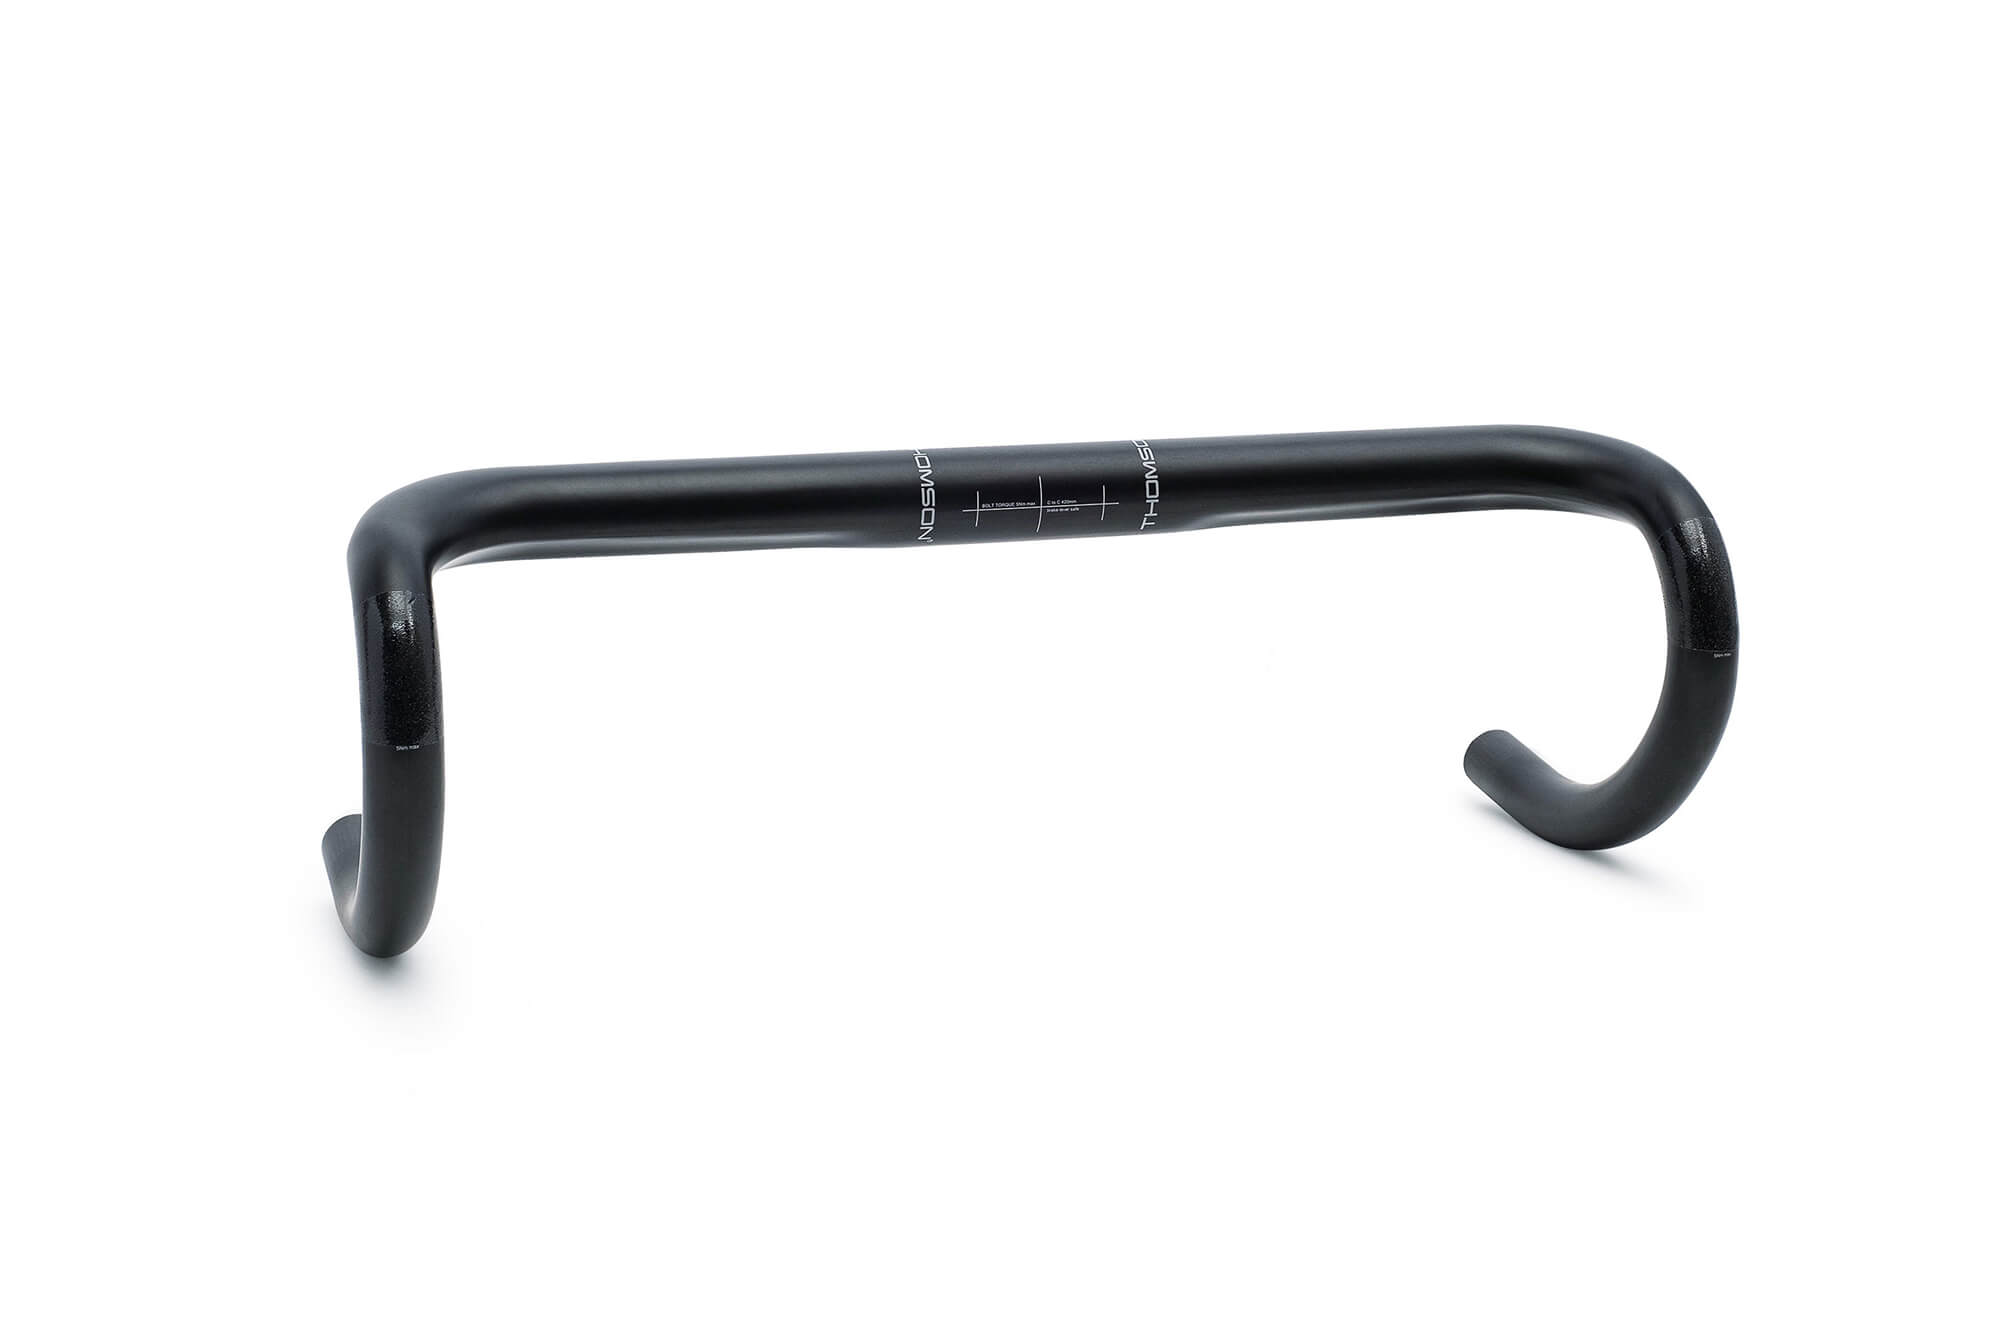 Carbon Fiber Aero Drop Bar Road Bike Bicycle Handlebars UD Black No Logo 31.8mm